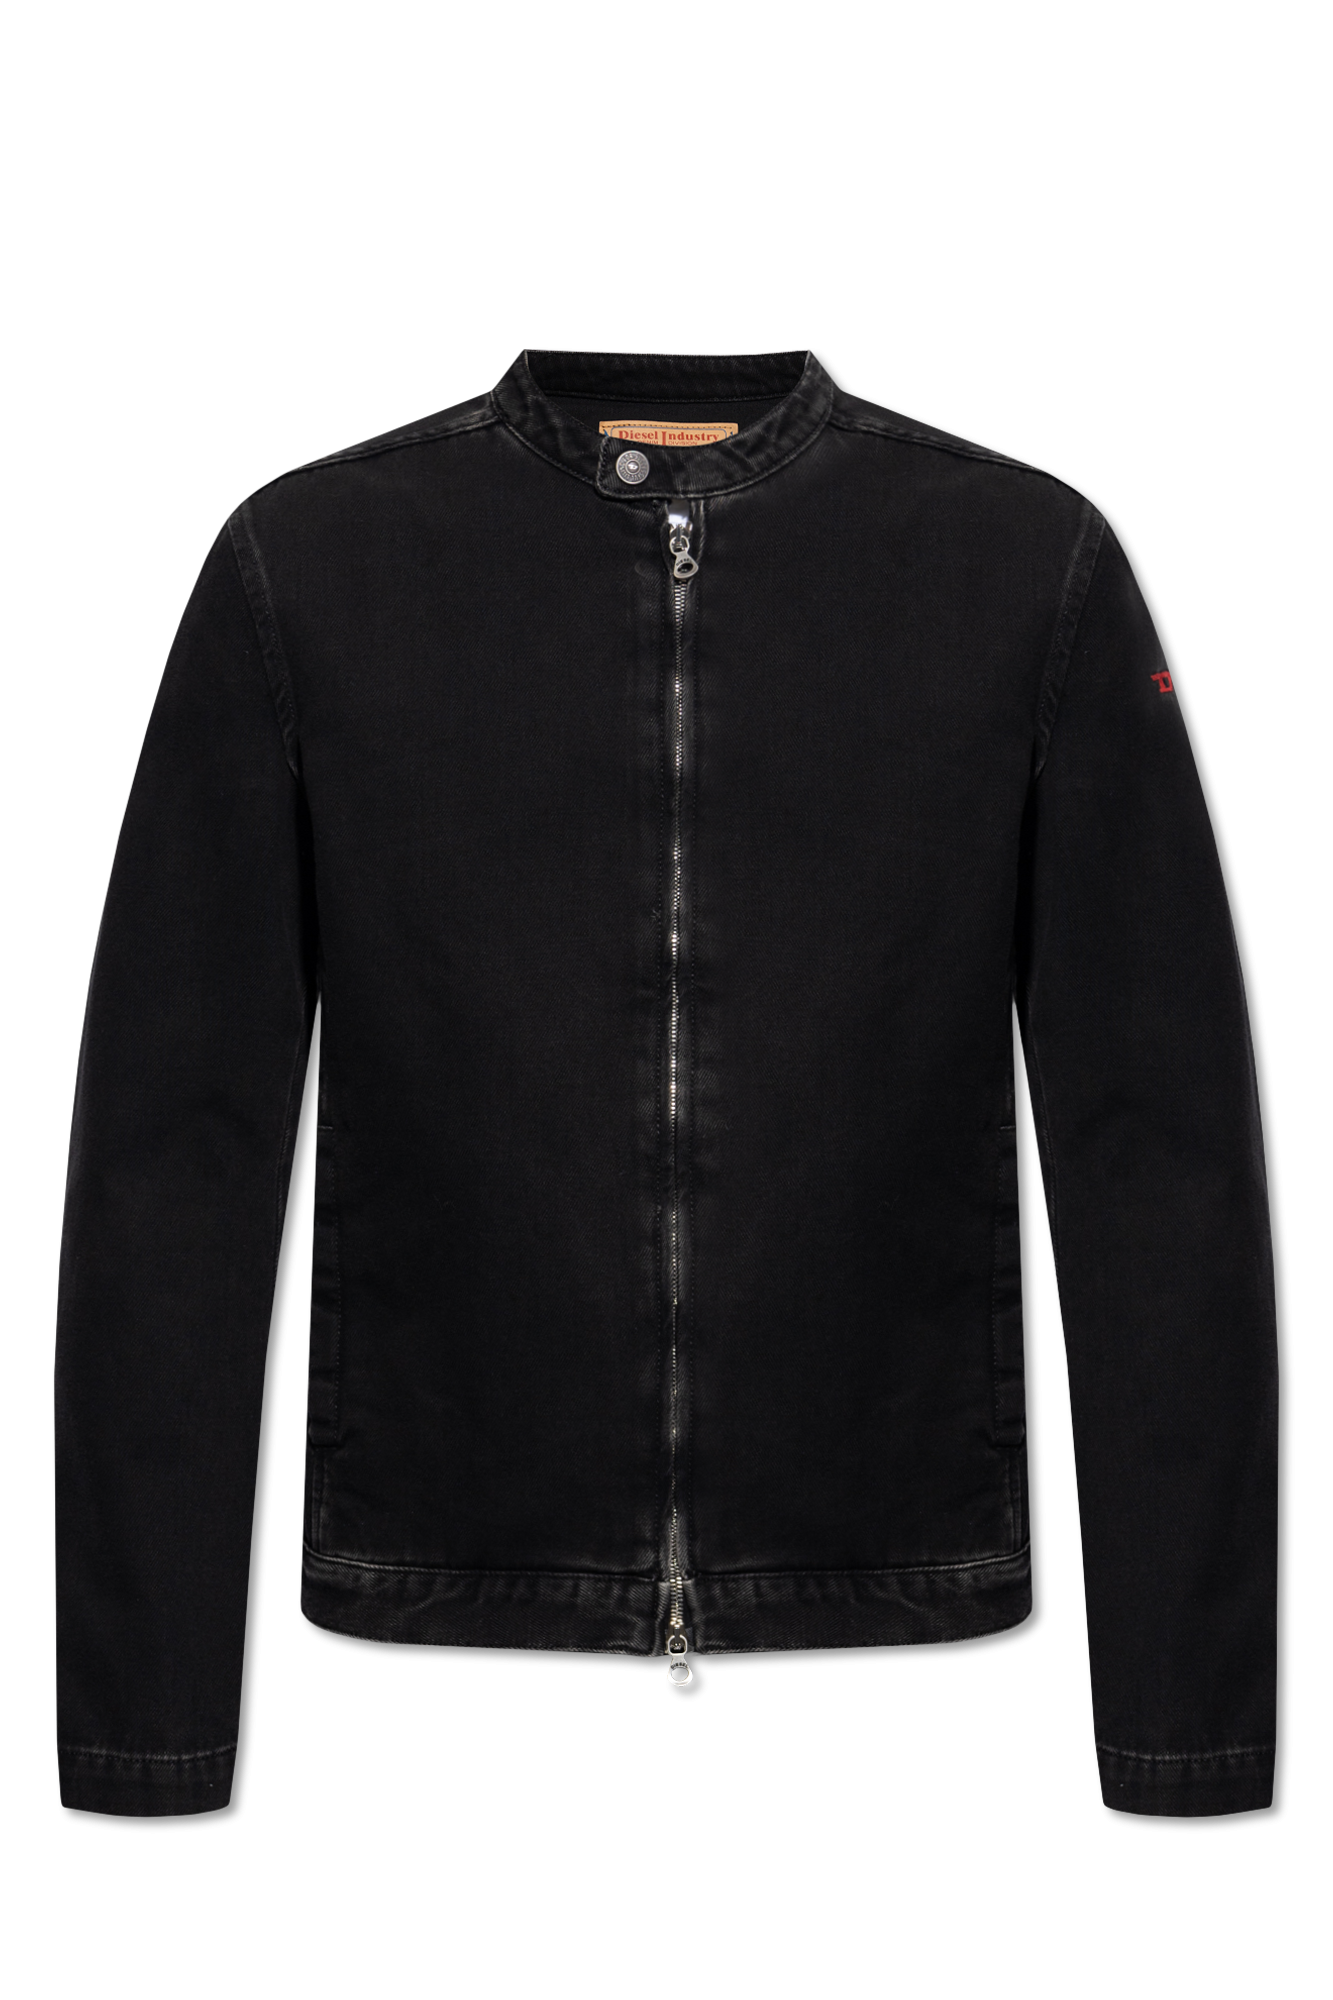 GenesinlifeShops Canada - revere collar shirt - GLORY' denim jacket Diesel  - Black 'D